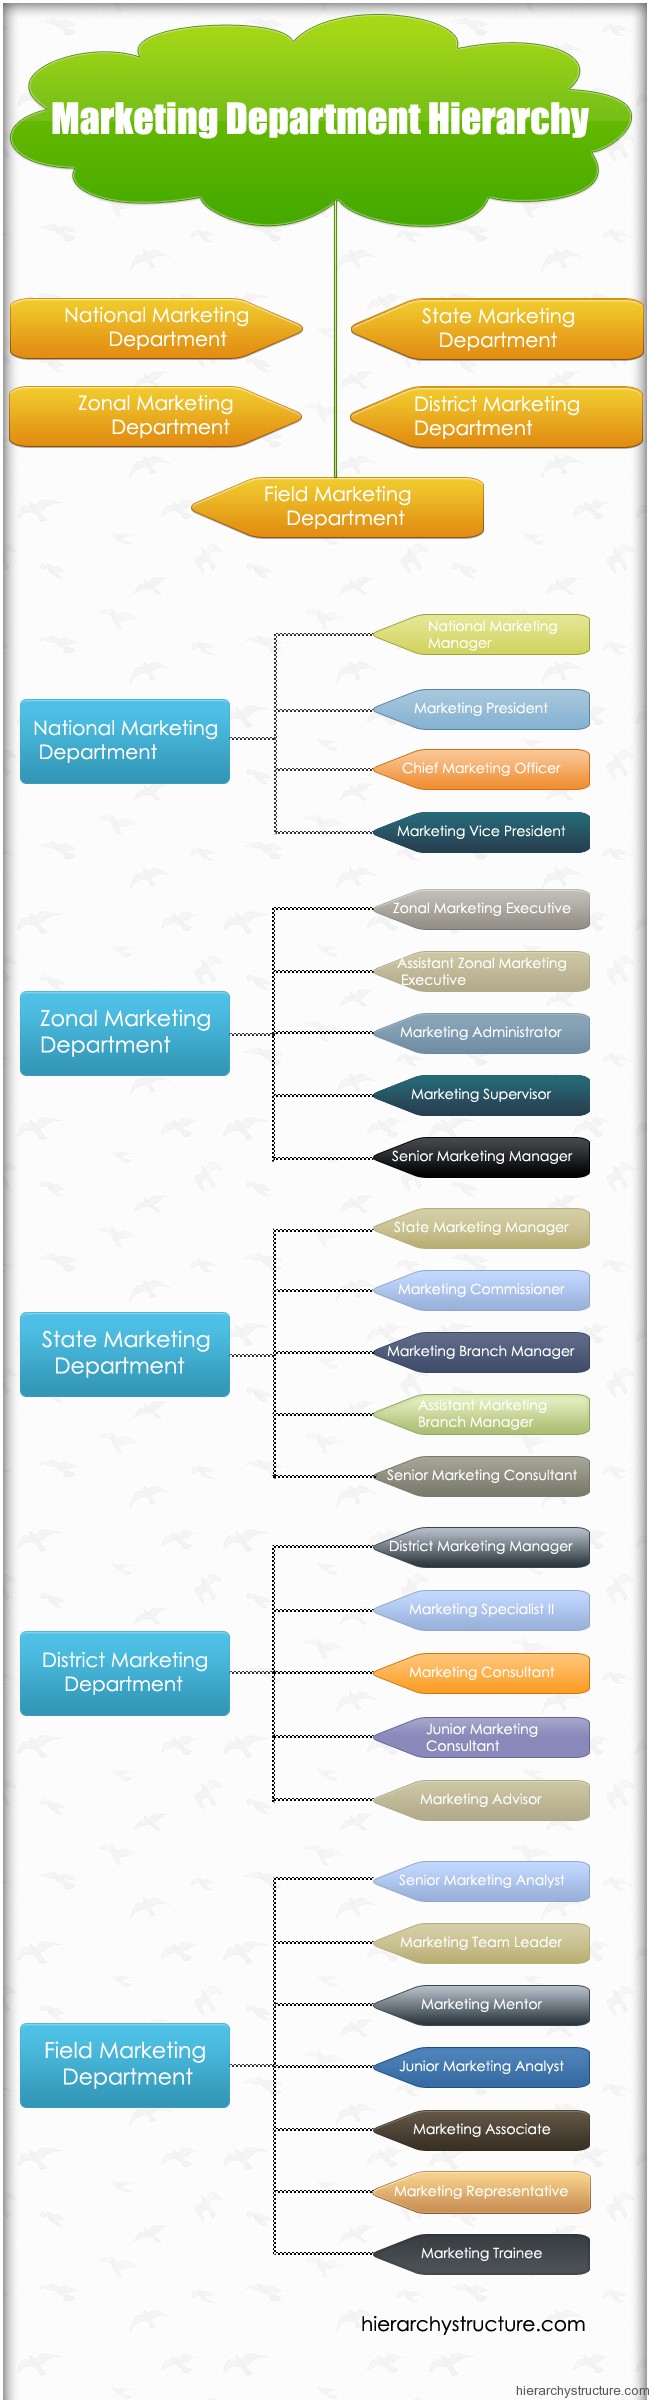 Marketing Department Hierarchy